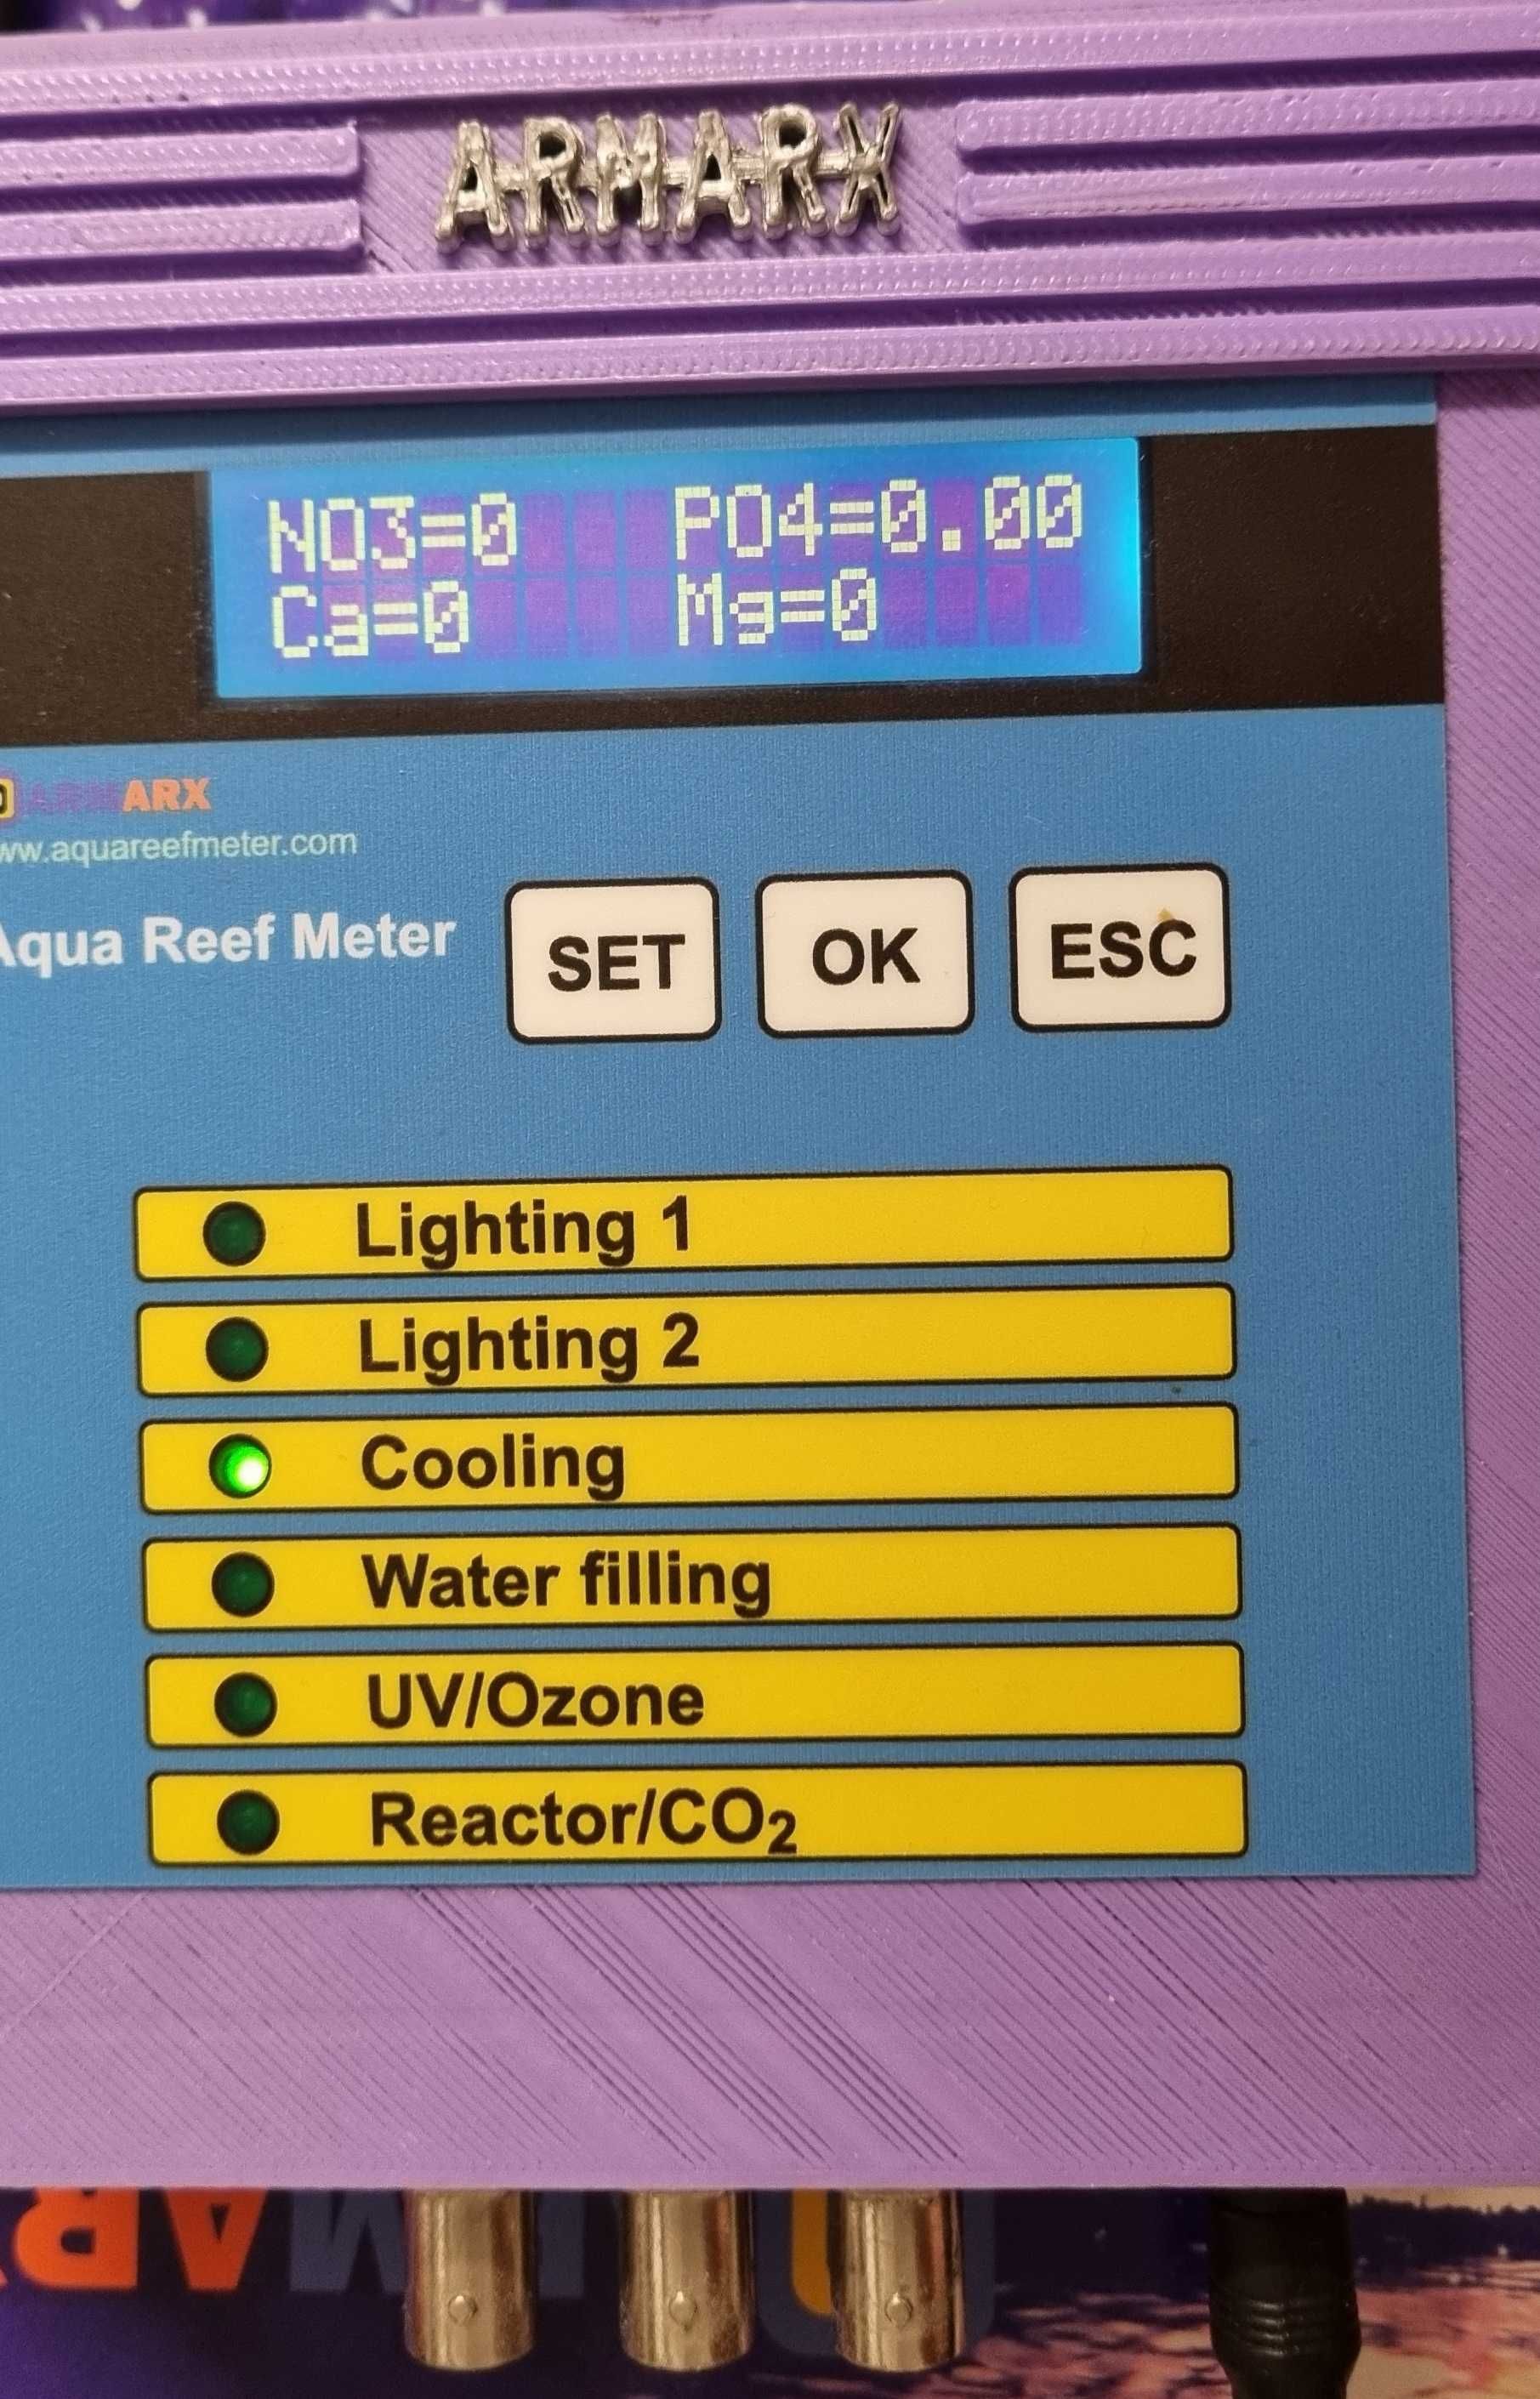 ARM - Aqua Reef Meter